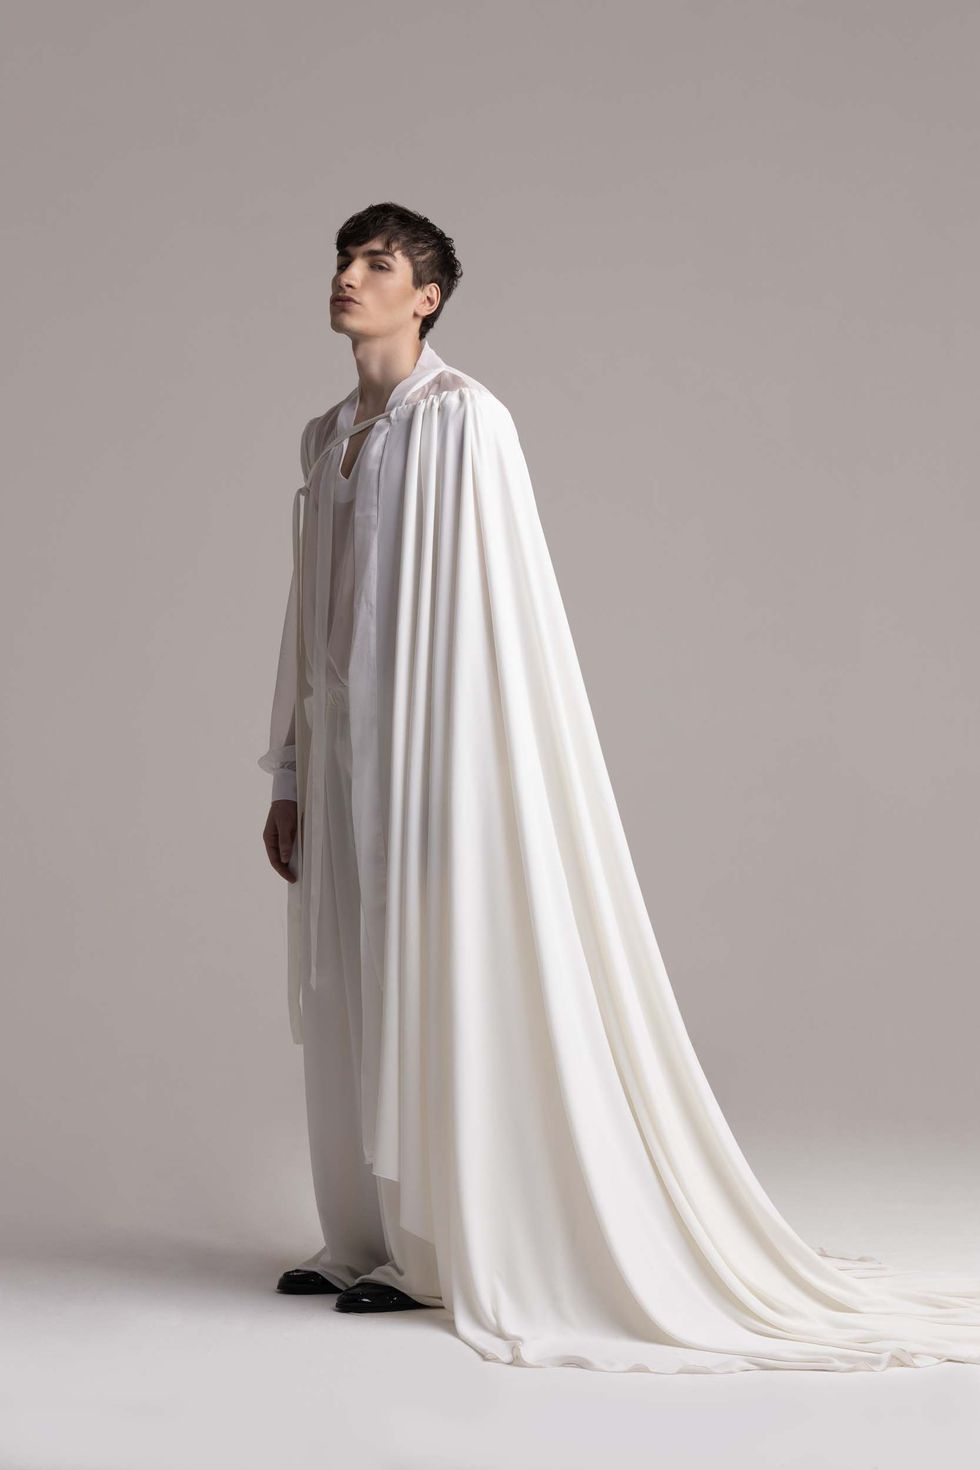 a man in a white robe